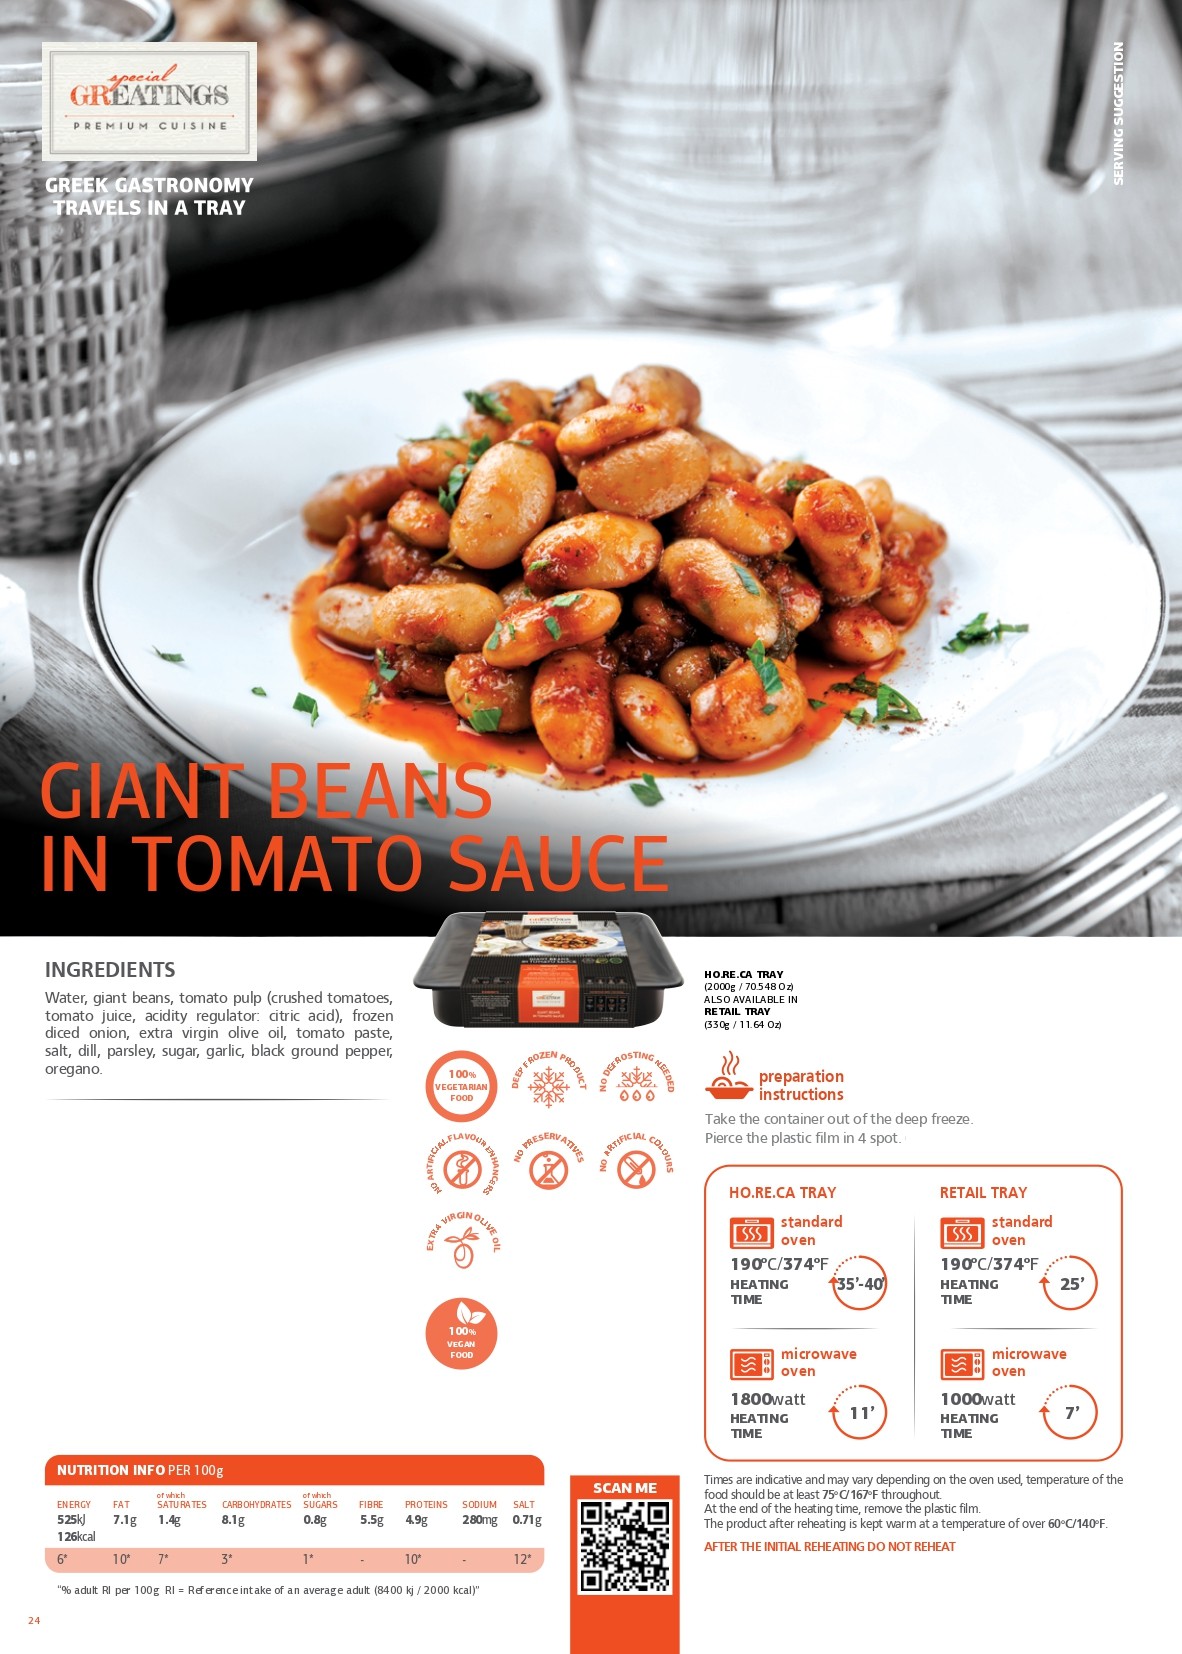 Giant beans in tomato sauce pdf image